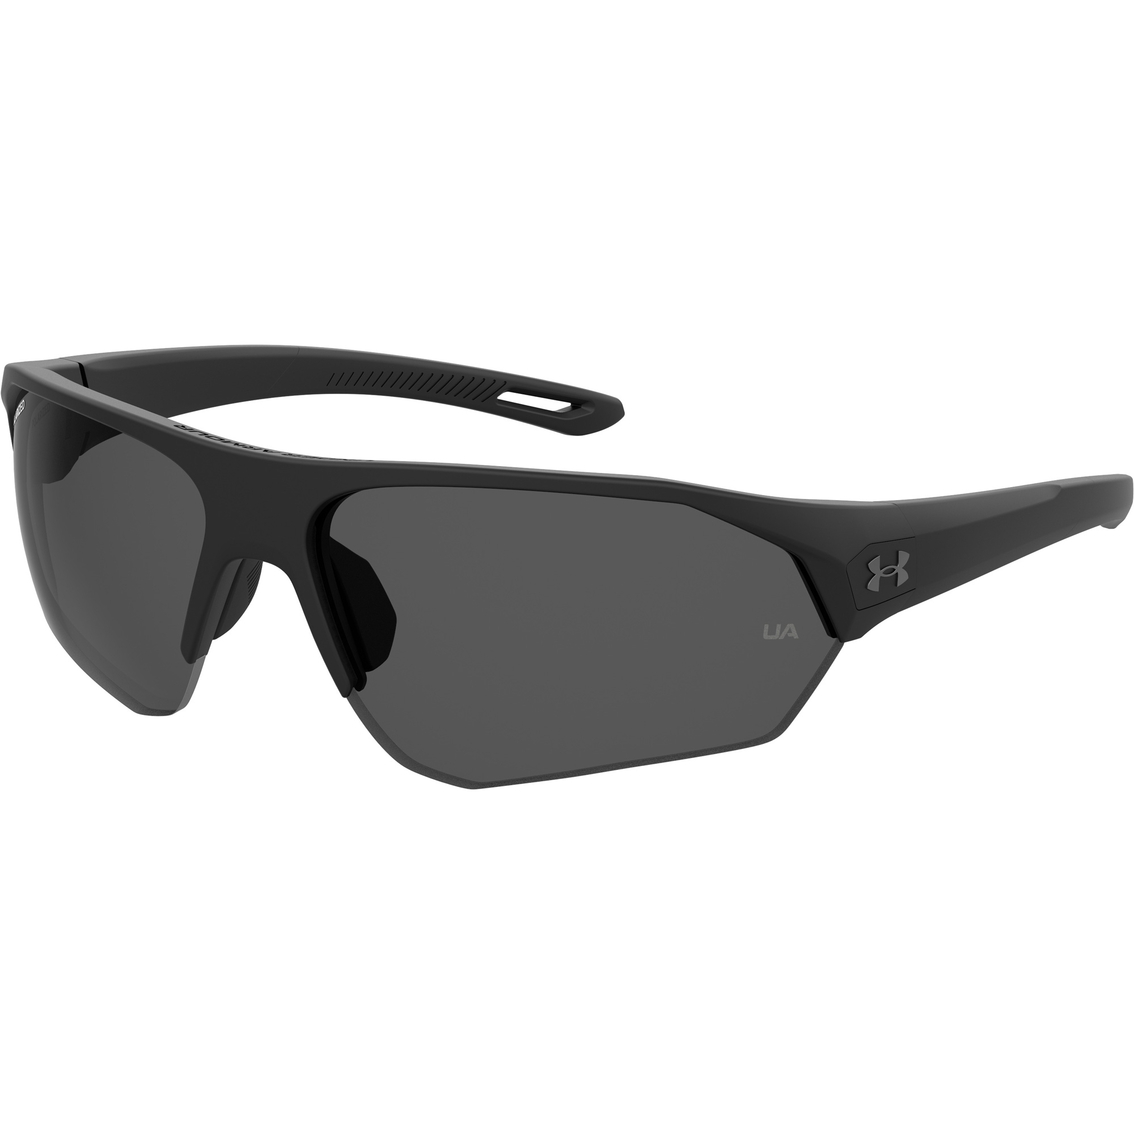 Under Armour Semi Rimmed Plastic Frame Shield Shape Sunglasses UA0001GS